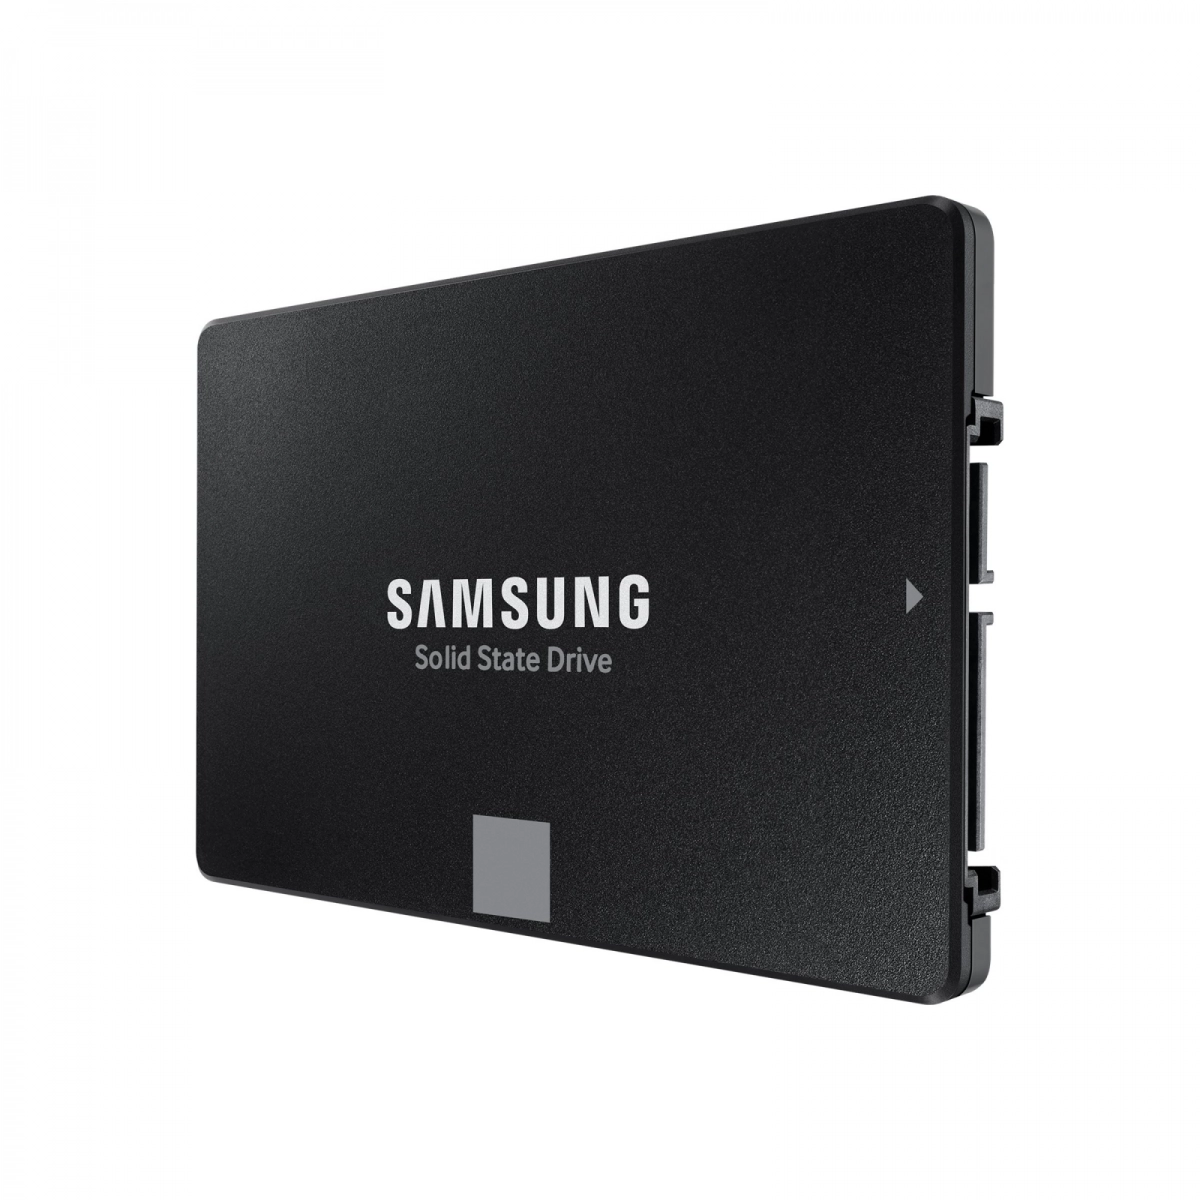 Notebook-Festplatte 500GB, SSD SATA3 MLC für LENOVO ThinkPad Z61t (9442)